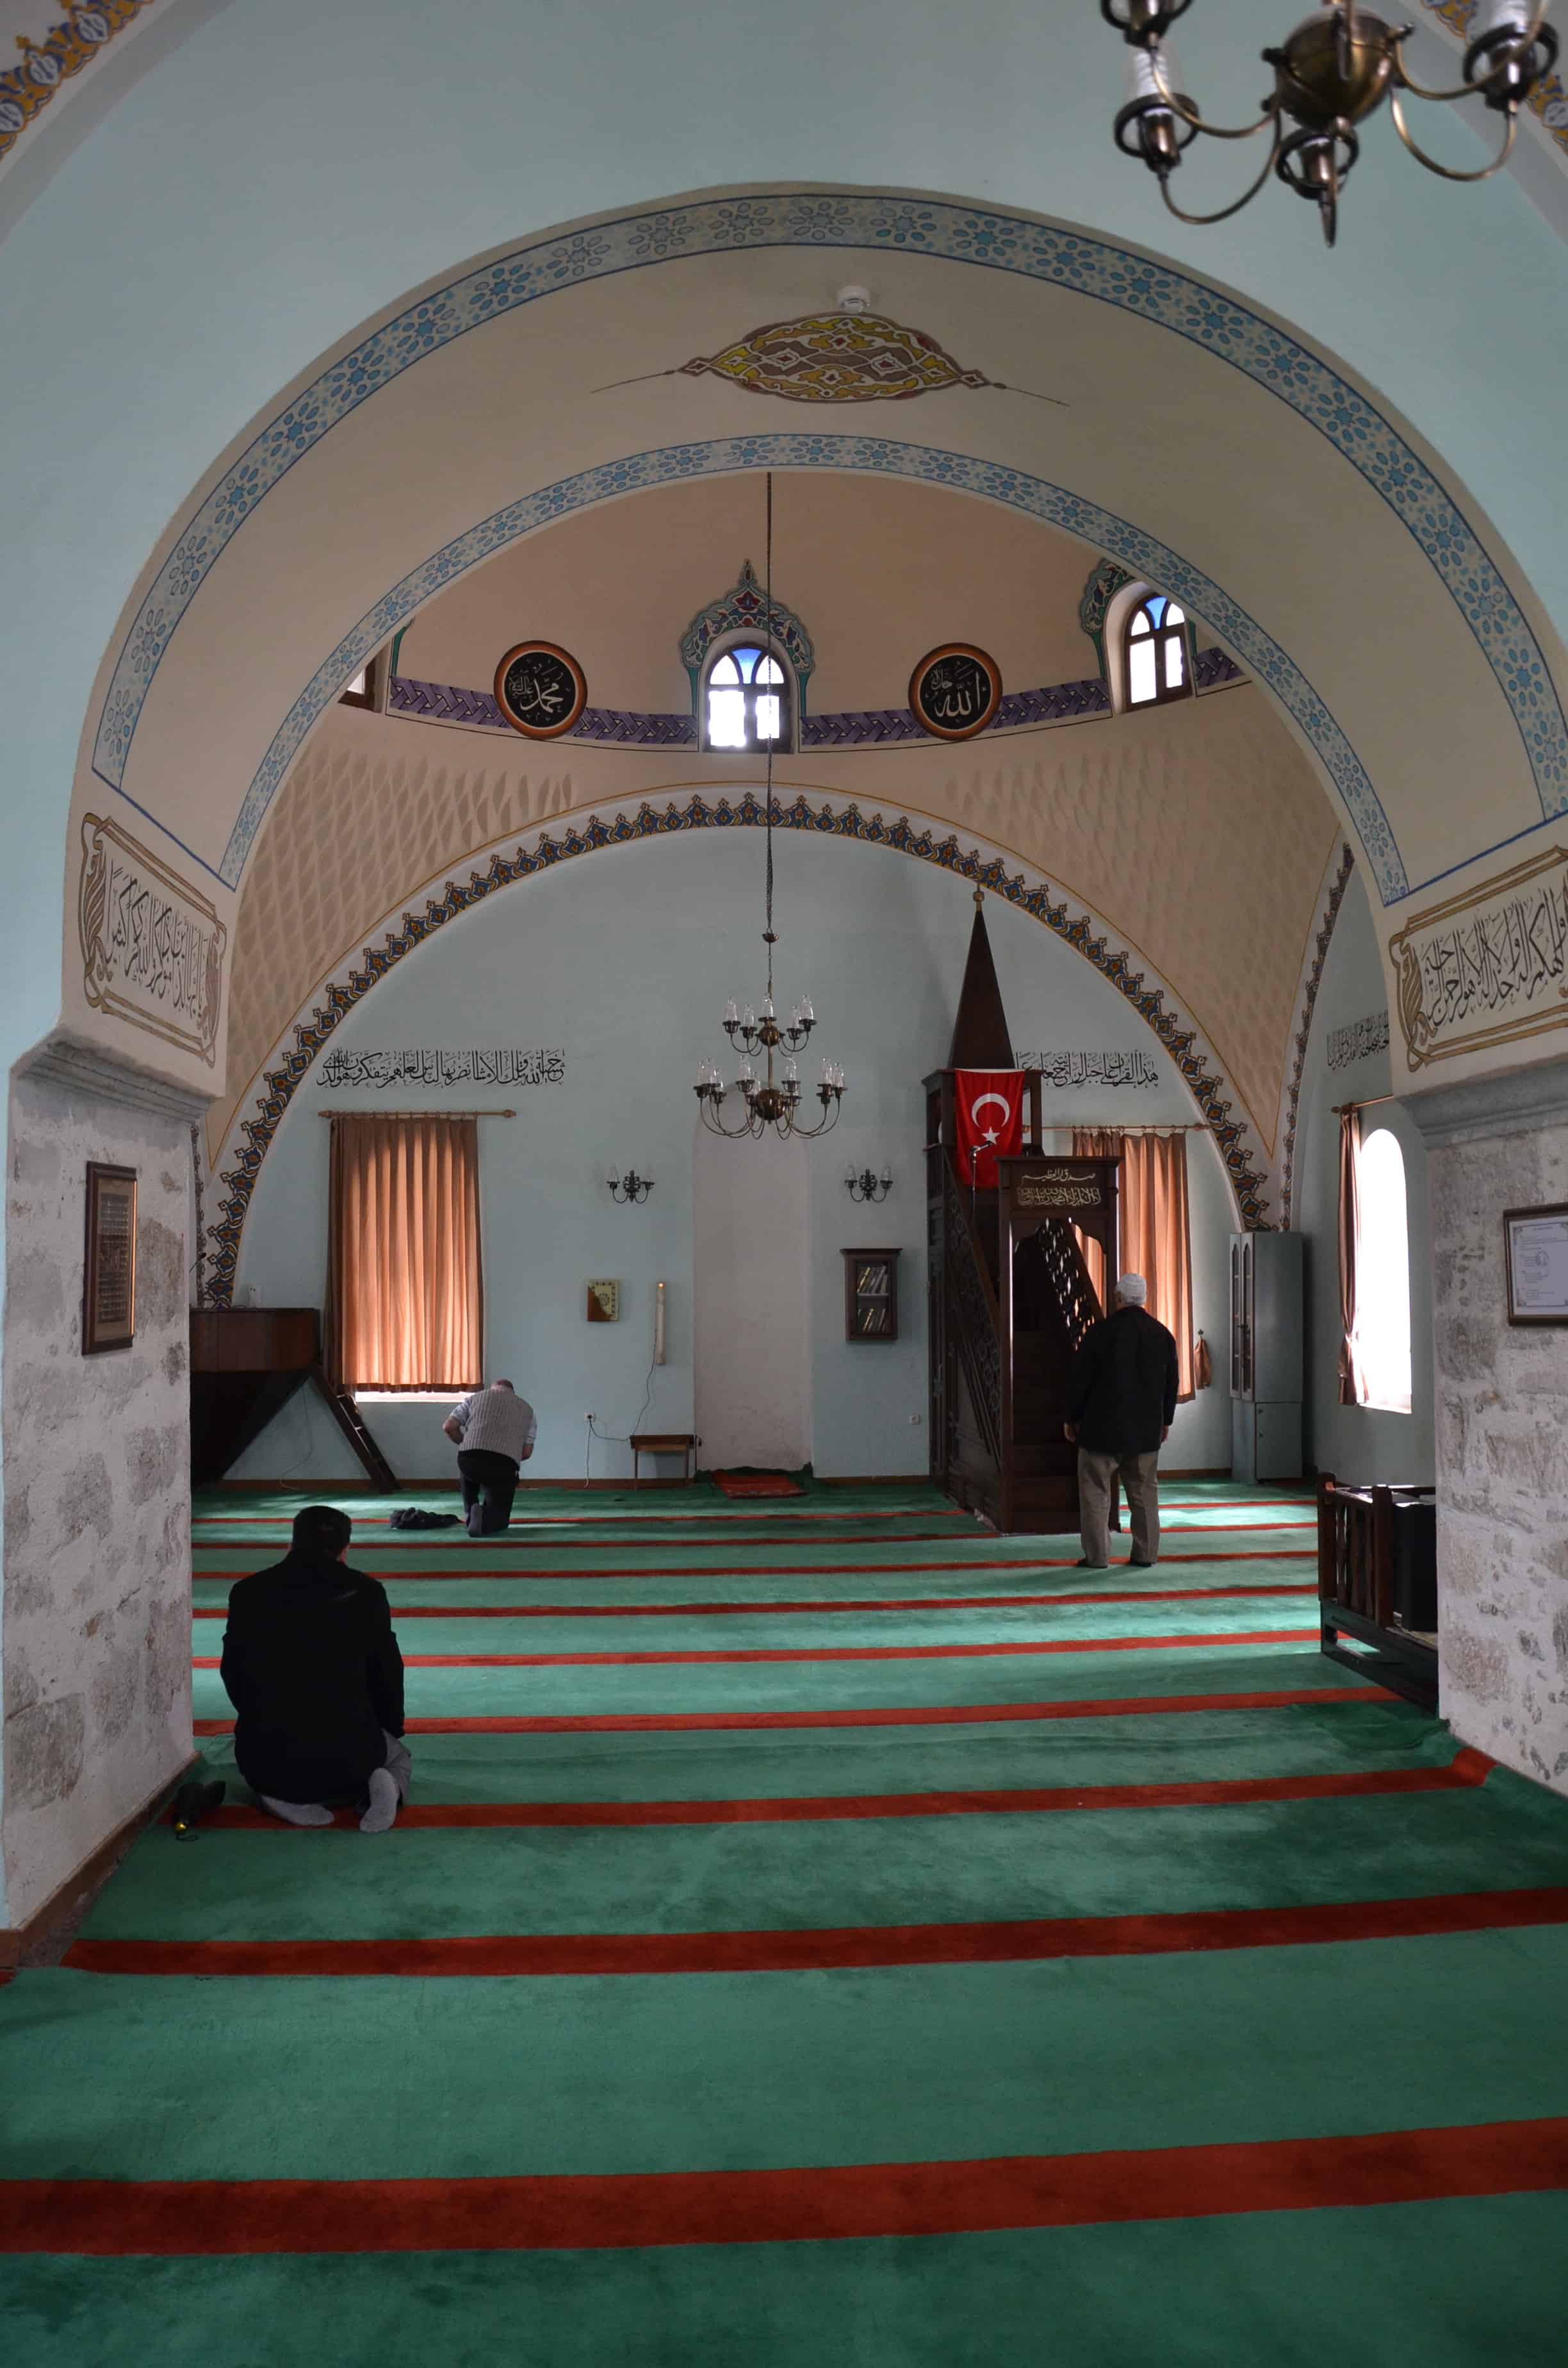 Prayer hall of the Burma Mosque in Uşak, Turkey